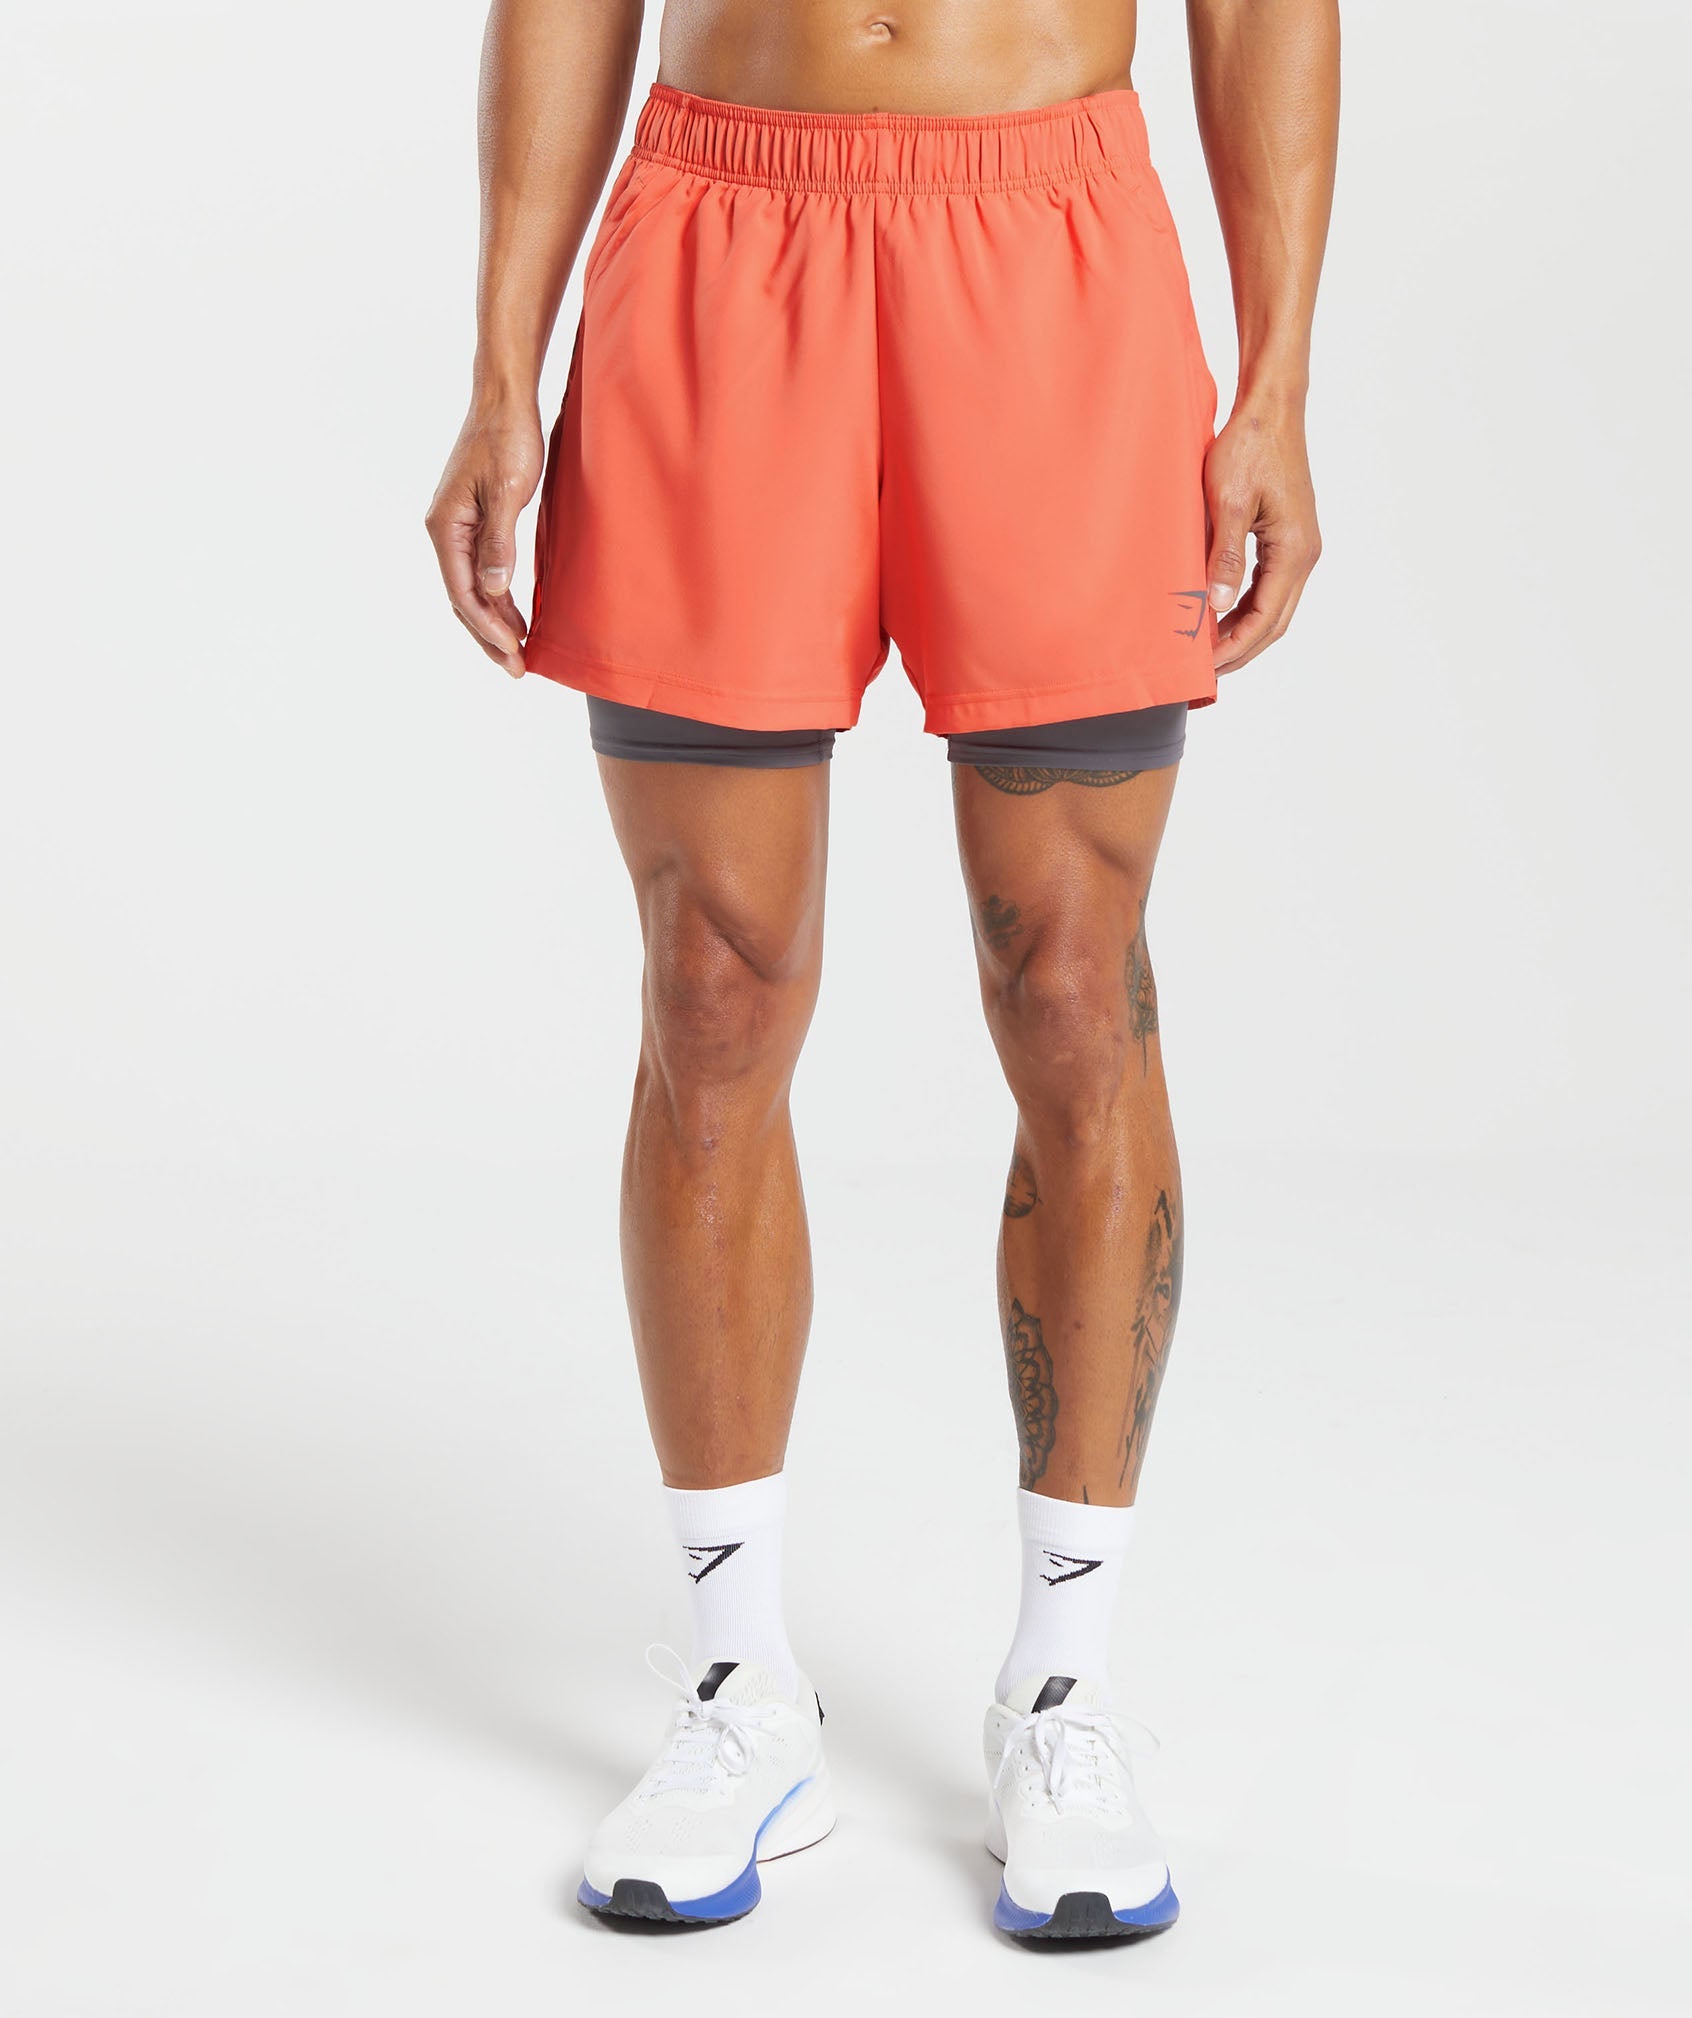 Bodychum Flowy Sports Shorts Light Breathable Soft Fabric 2 in 1